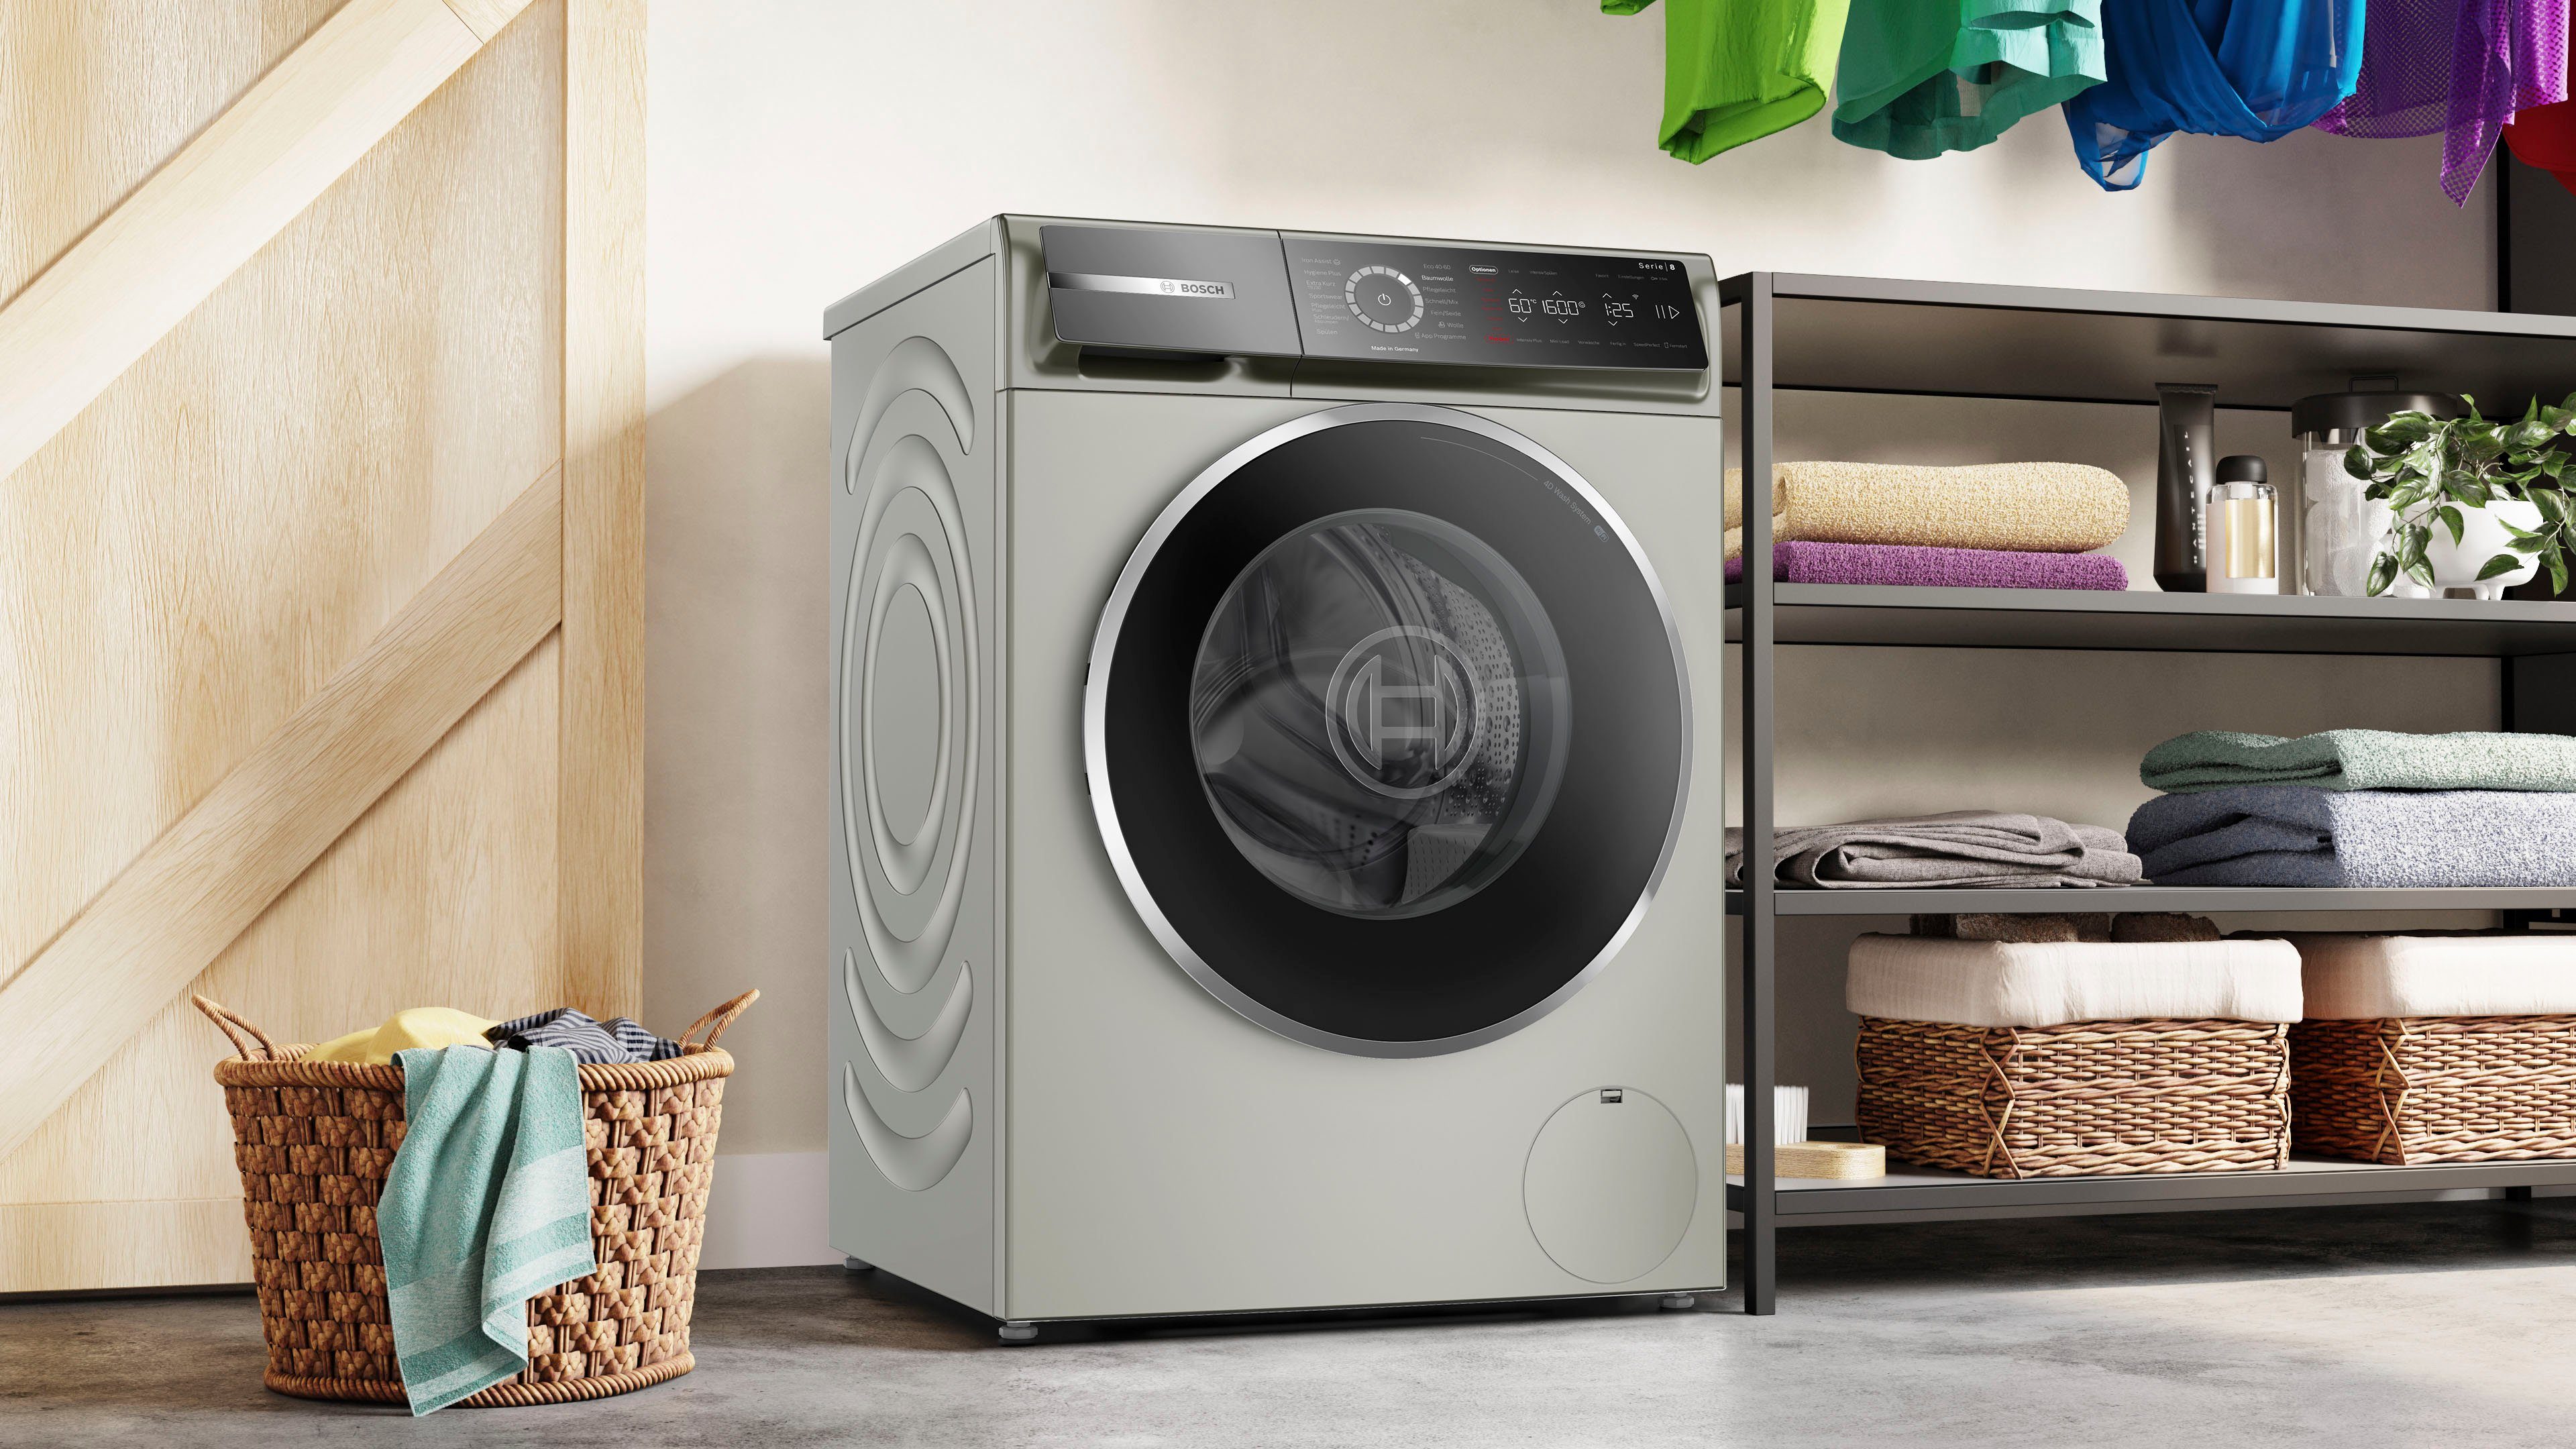 Serie 8 Iron BOSCH Waschmaschine 1600 10 50 % U/min, der Falten WGB2560X0, Assist Dampf kg, reduziert dank